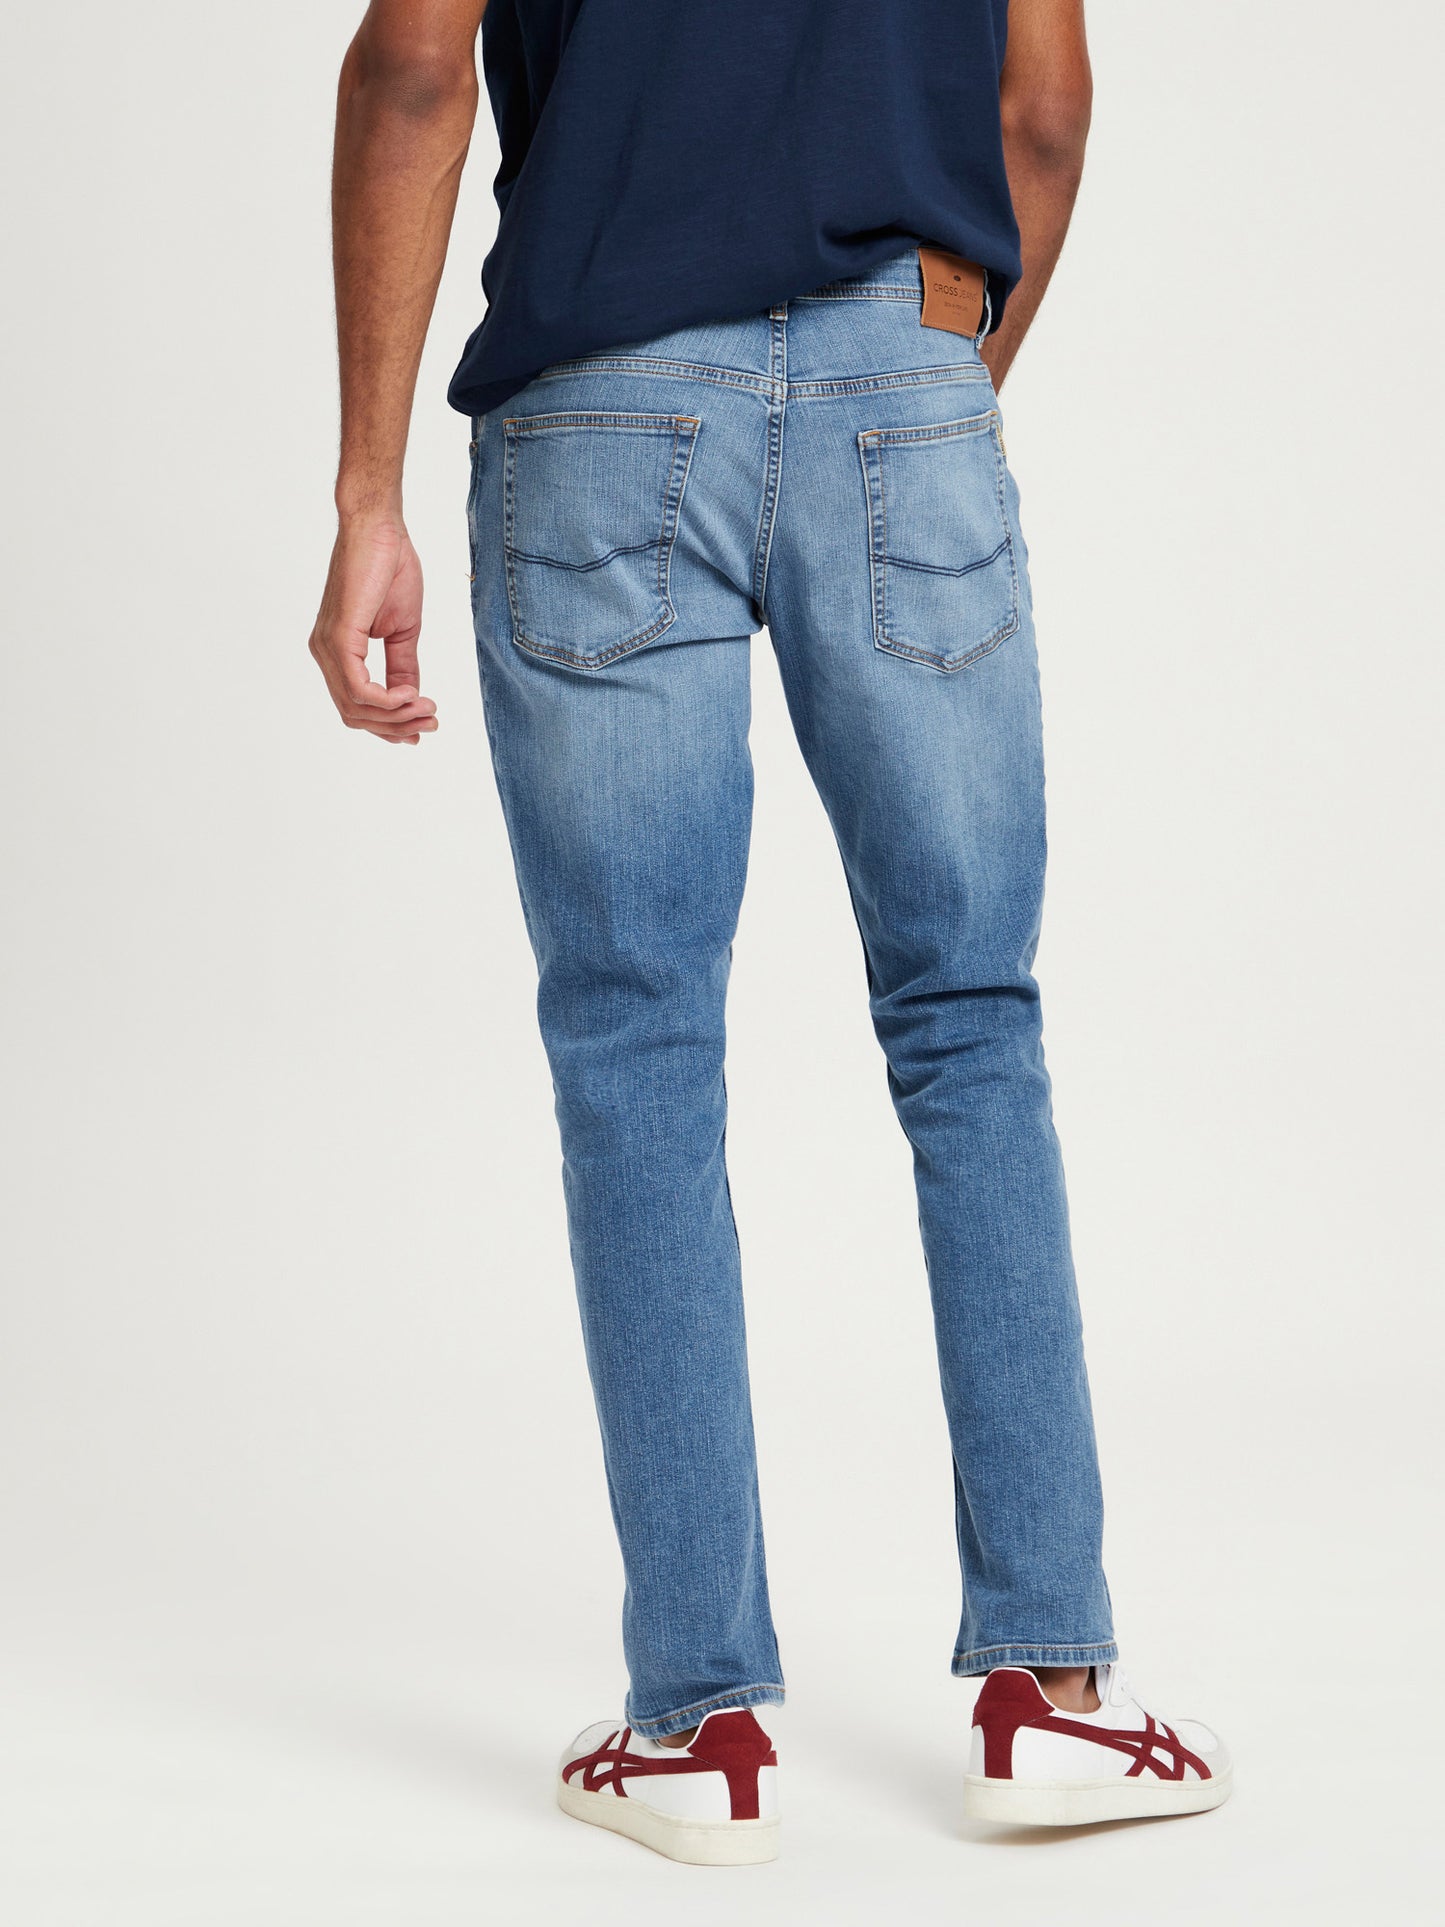 Dylan Herren Jeans Regular Fit Regular Waist Straight Leg hellblau